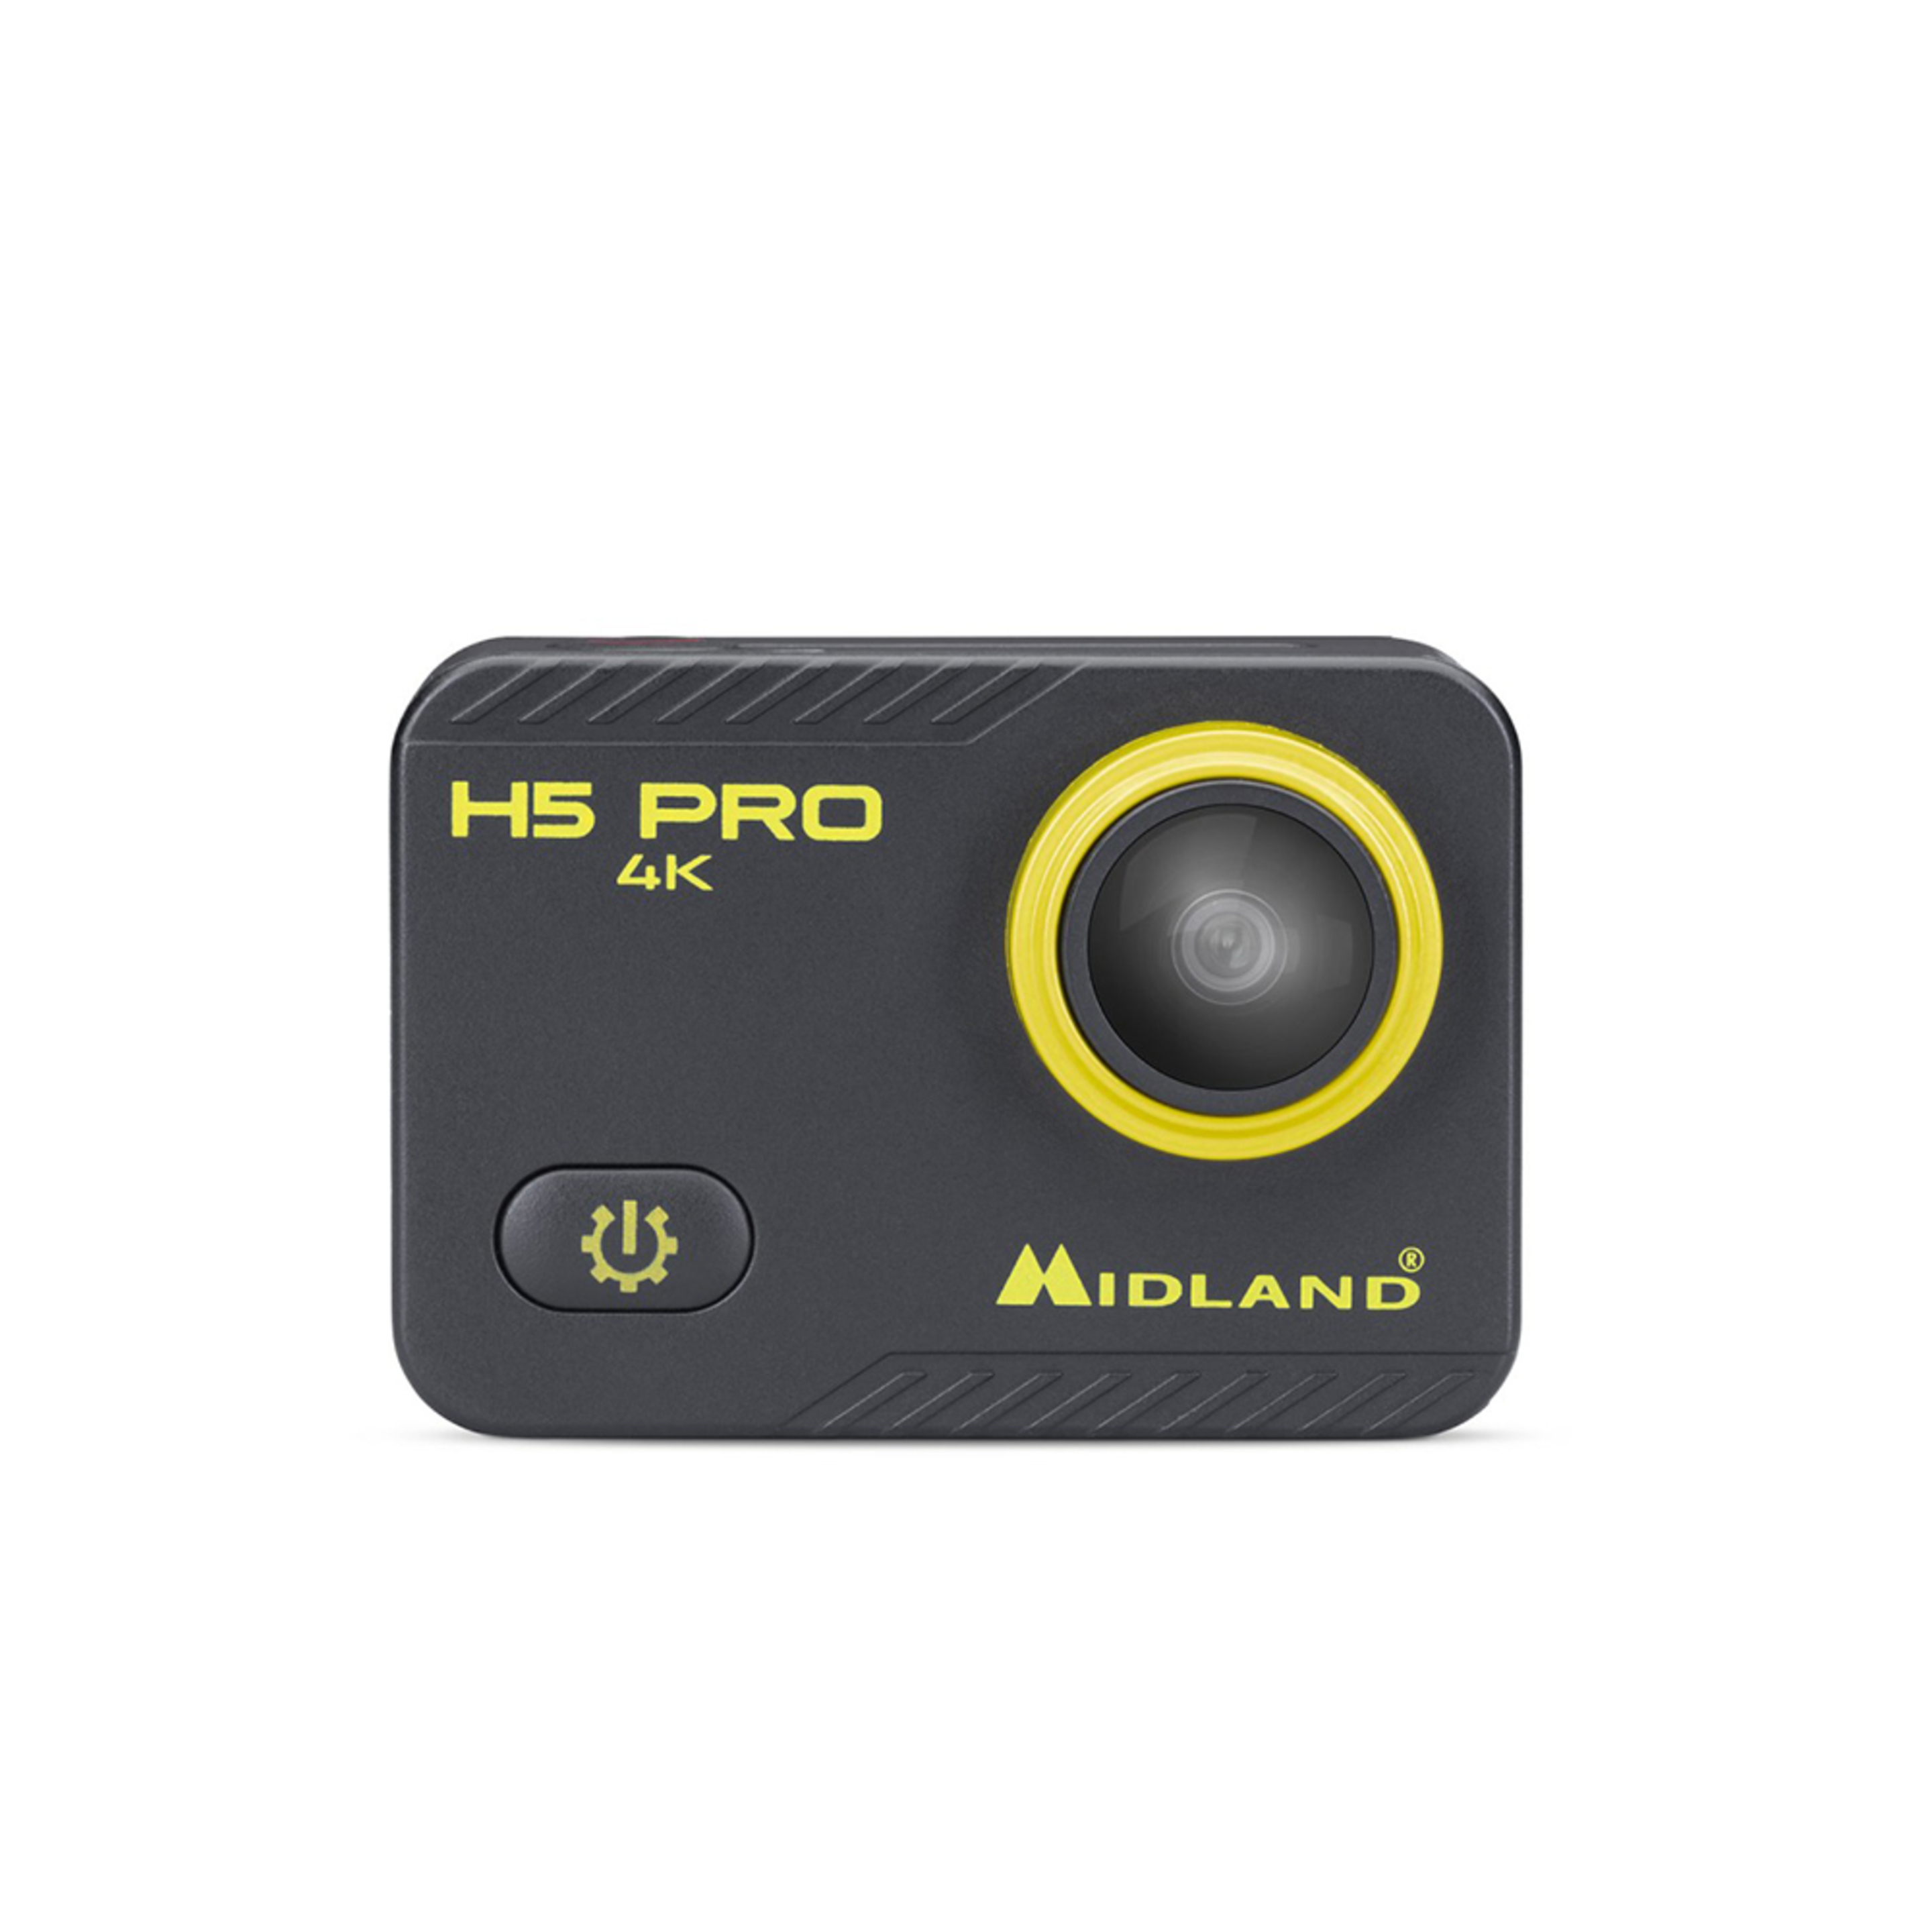 Cámara Deportiva Midland H5 Pro Wifi 4k 30fps Waterpoof 30m - Negro - Camara Deportiva  MKP